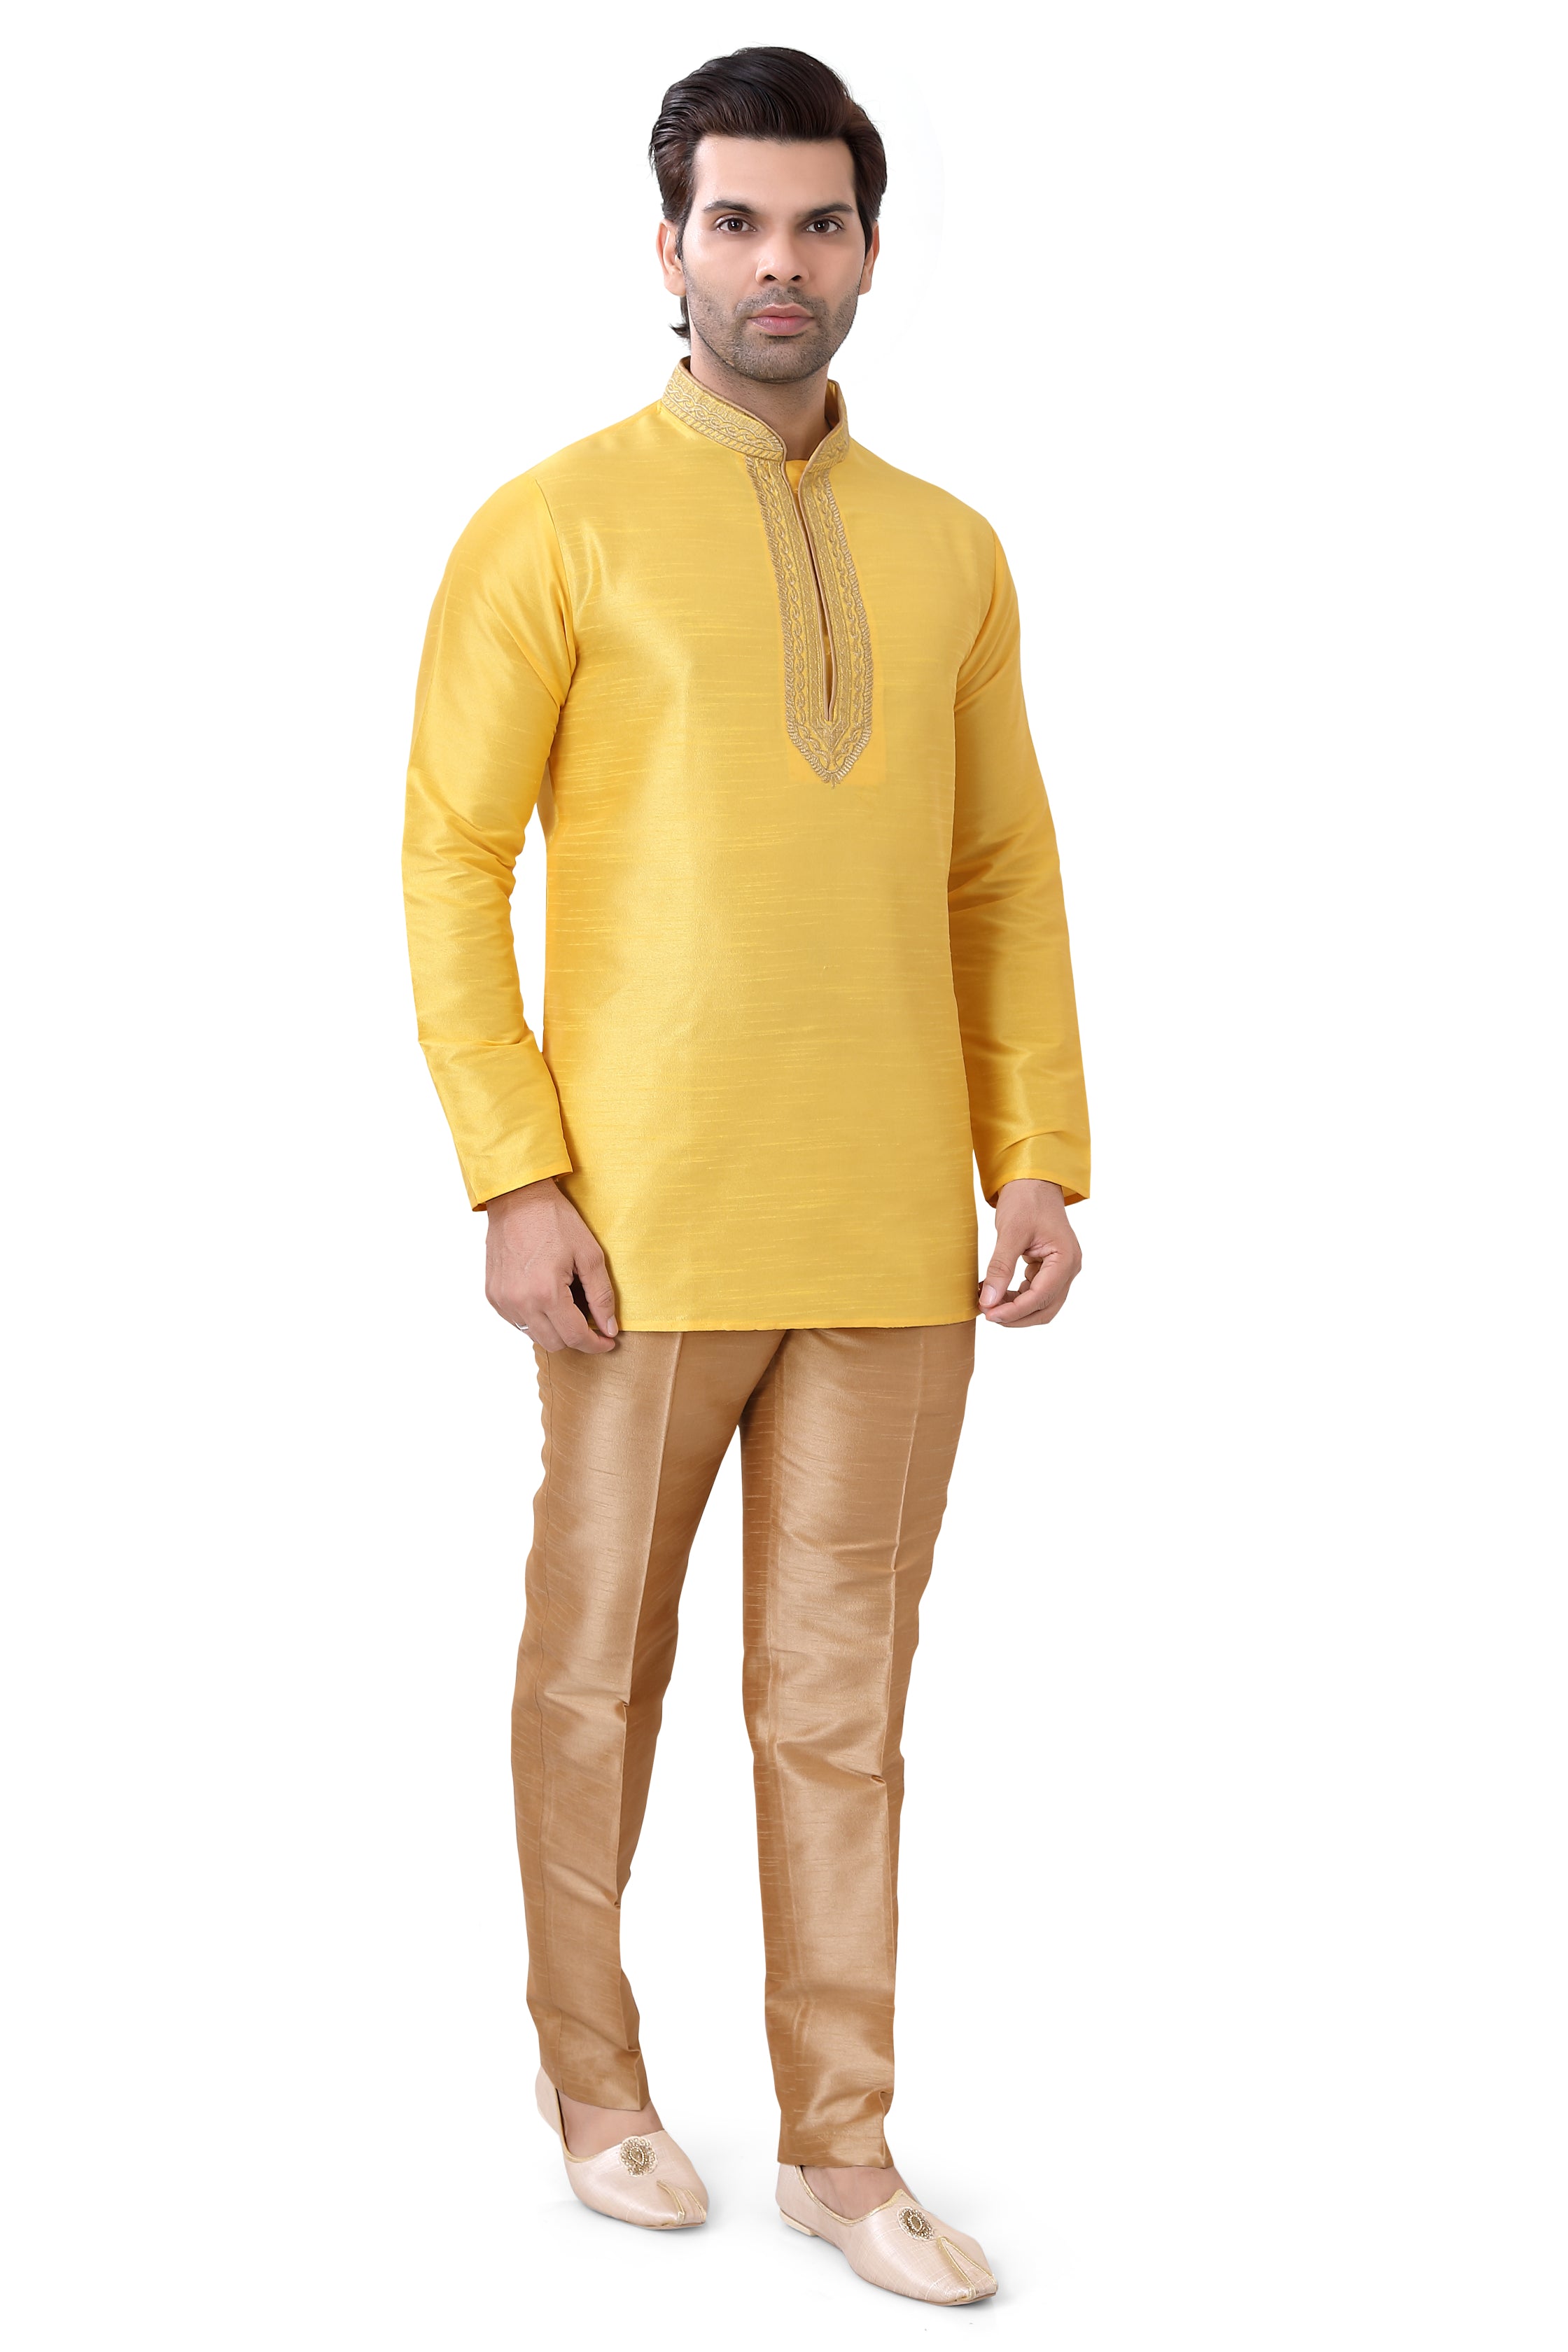 Banarasi Dupion Silk Short Kurta with embroidery in Yellow color